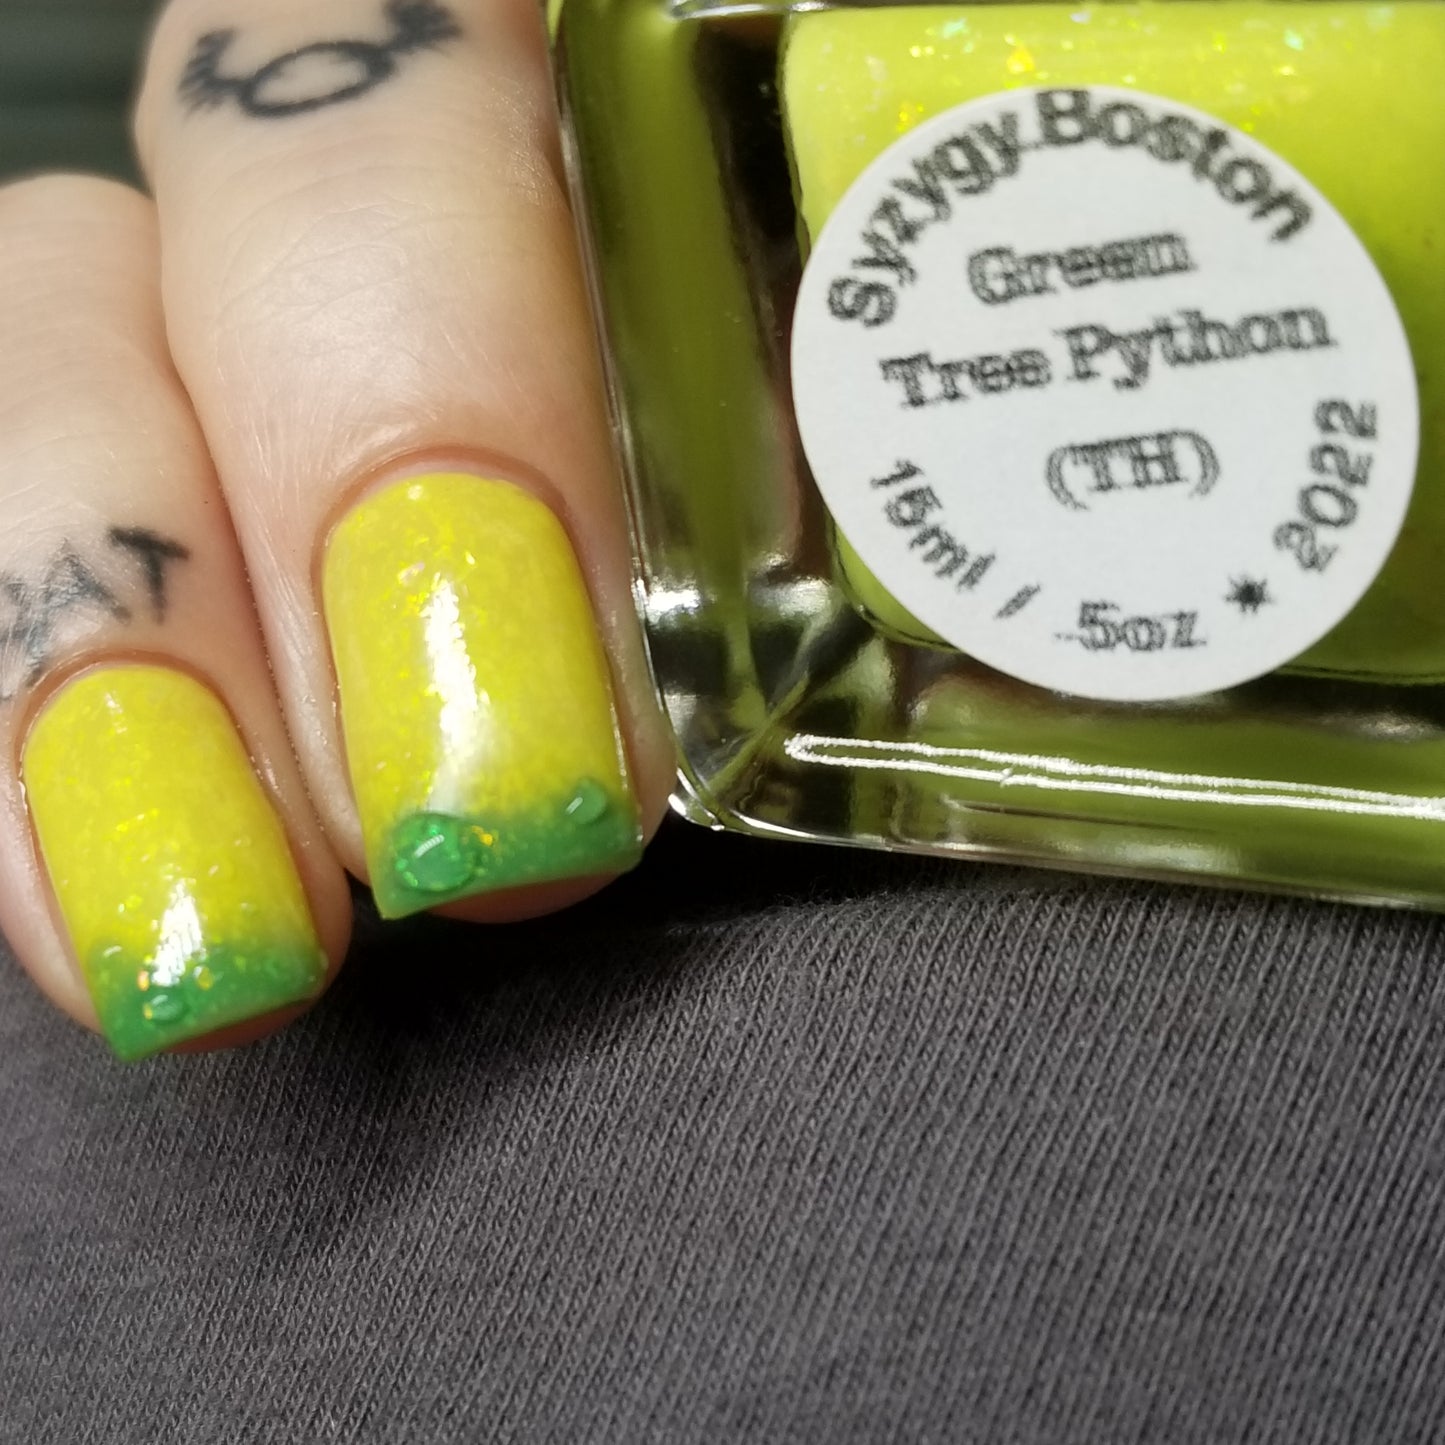 Green Tree Python